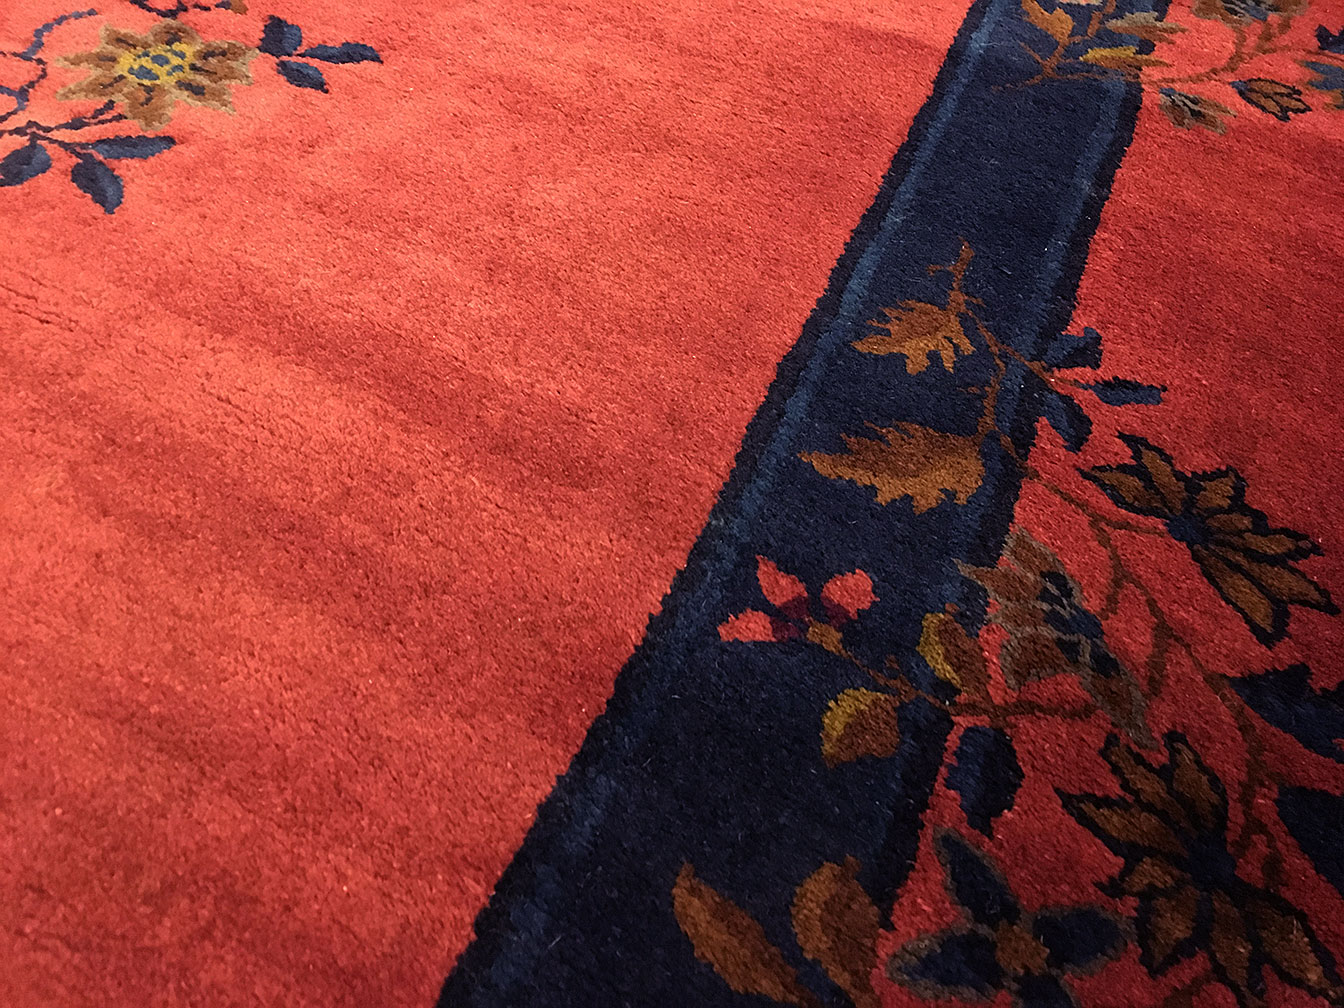 Antique chinese Carpet - # 52740